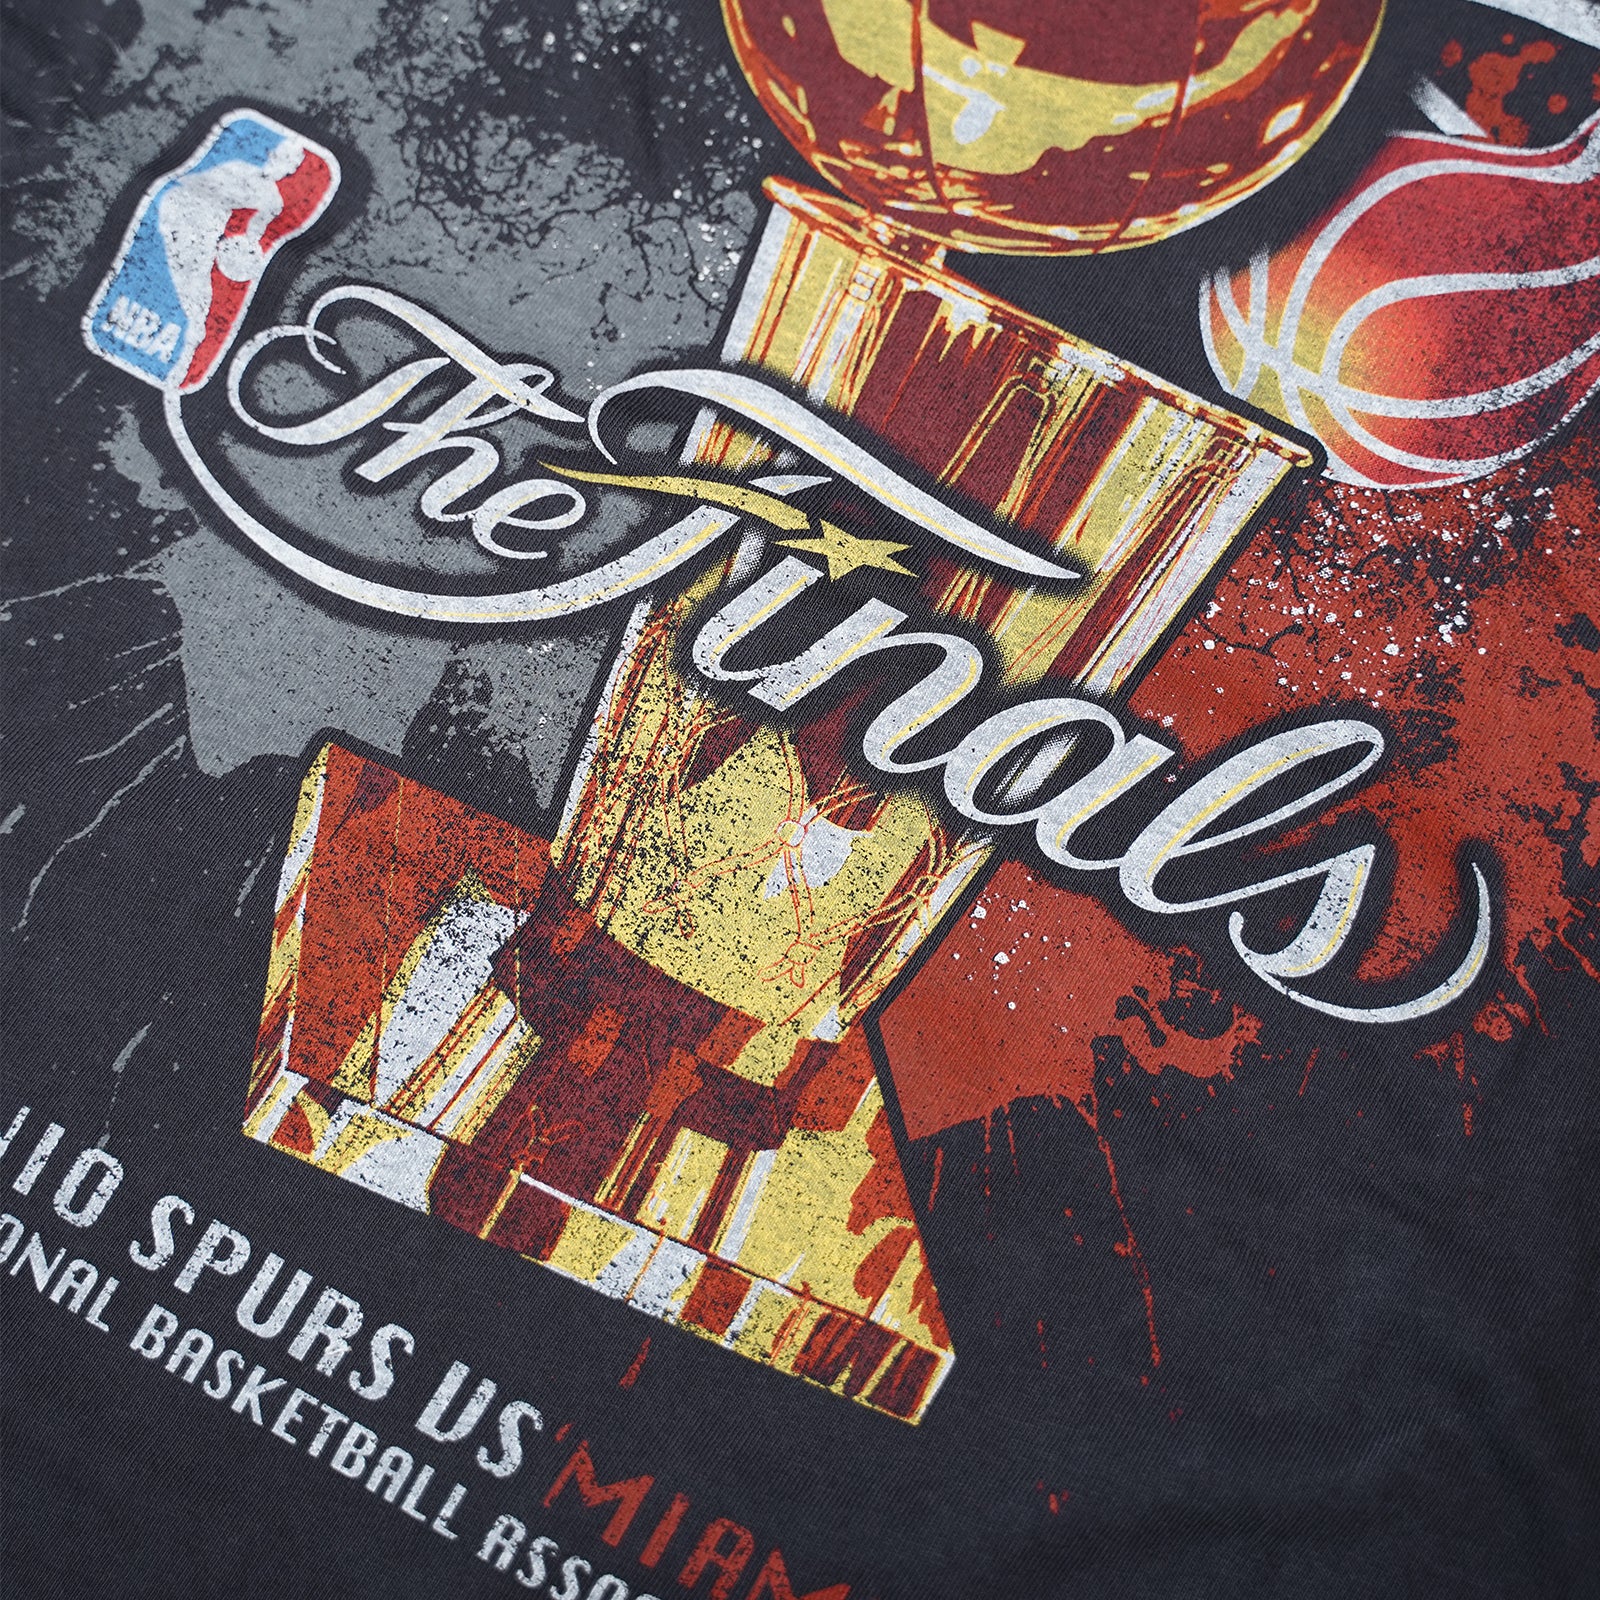 2013 Miami Heat vs San Antonio Spurs NBA Finals T Shirt Size XL – Rare VNTG